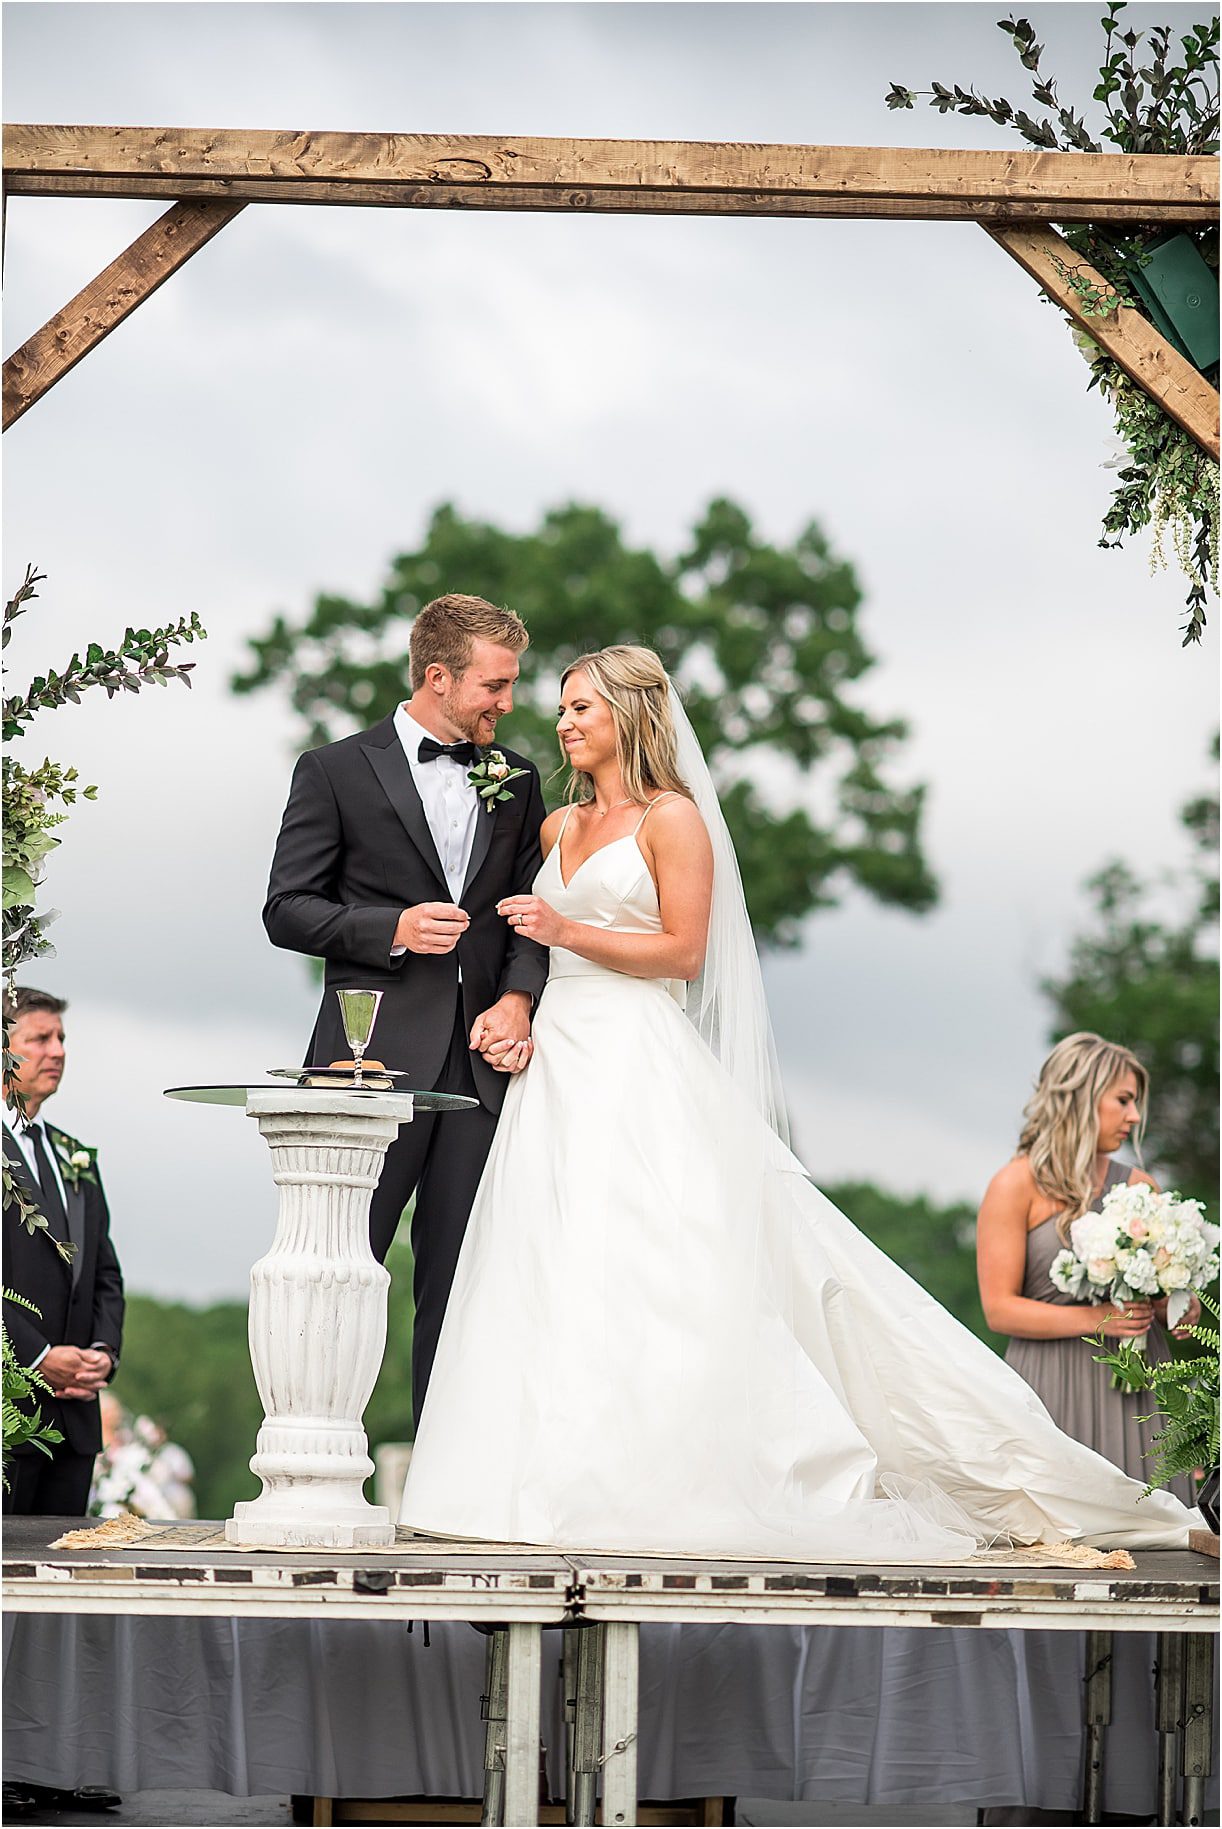 Communion | Drive In Wedding Ideas | COVID Wedding Ceremony Ideas | Hill City Bride Virginia Weddings